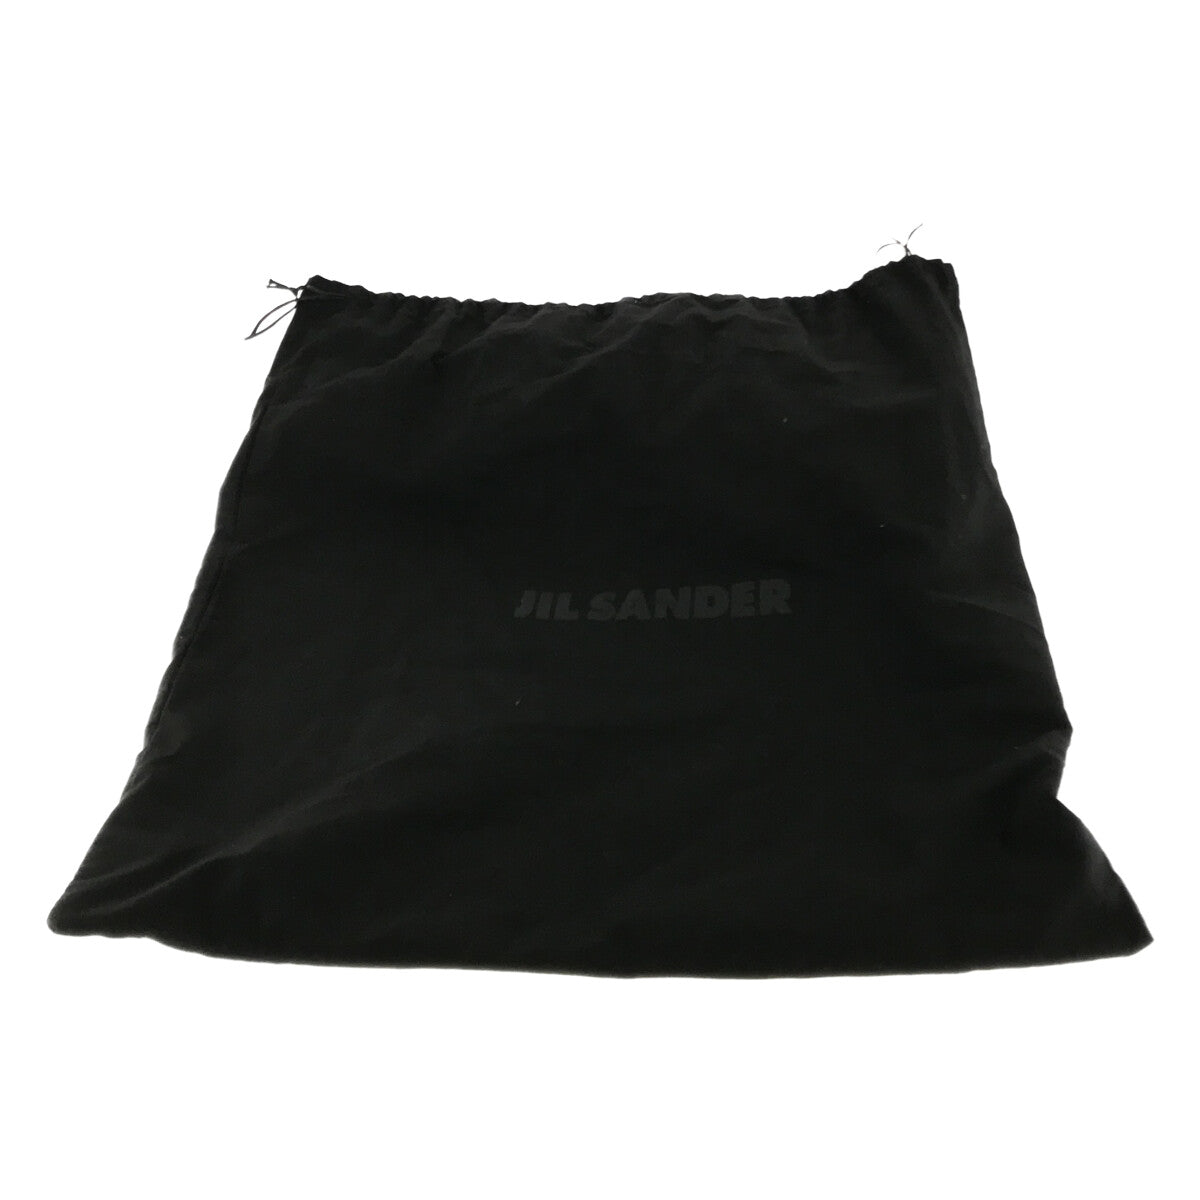 JIL SANDER / ジルサンダー | イタリア製 2way ショルダー付き レザー トート バッグ 保存袋有 ユニセックス |